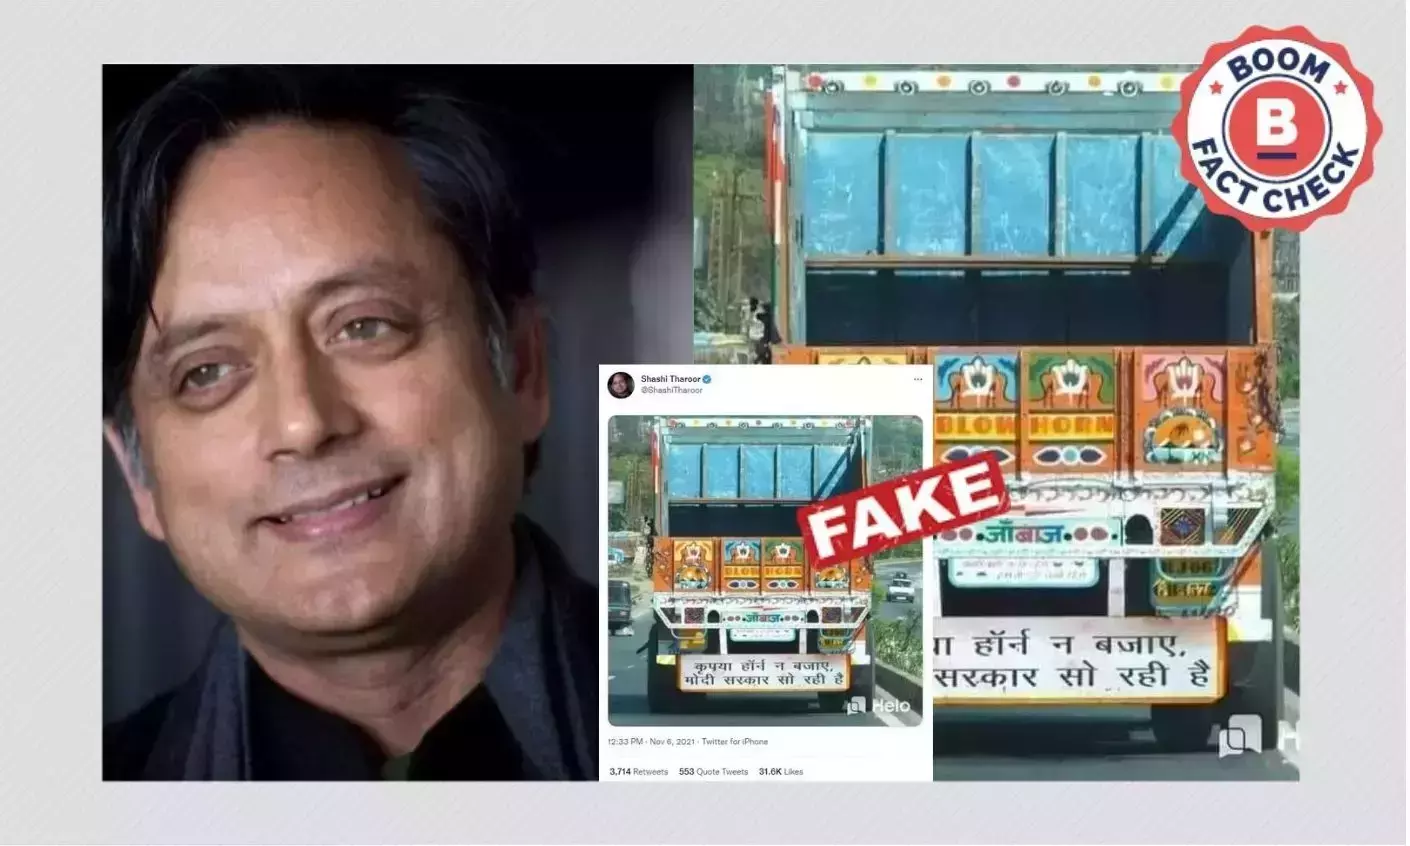 Shashi Tharoor Tweets Morphed Image Of Truck Taking Dig At PM Modi